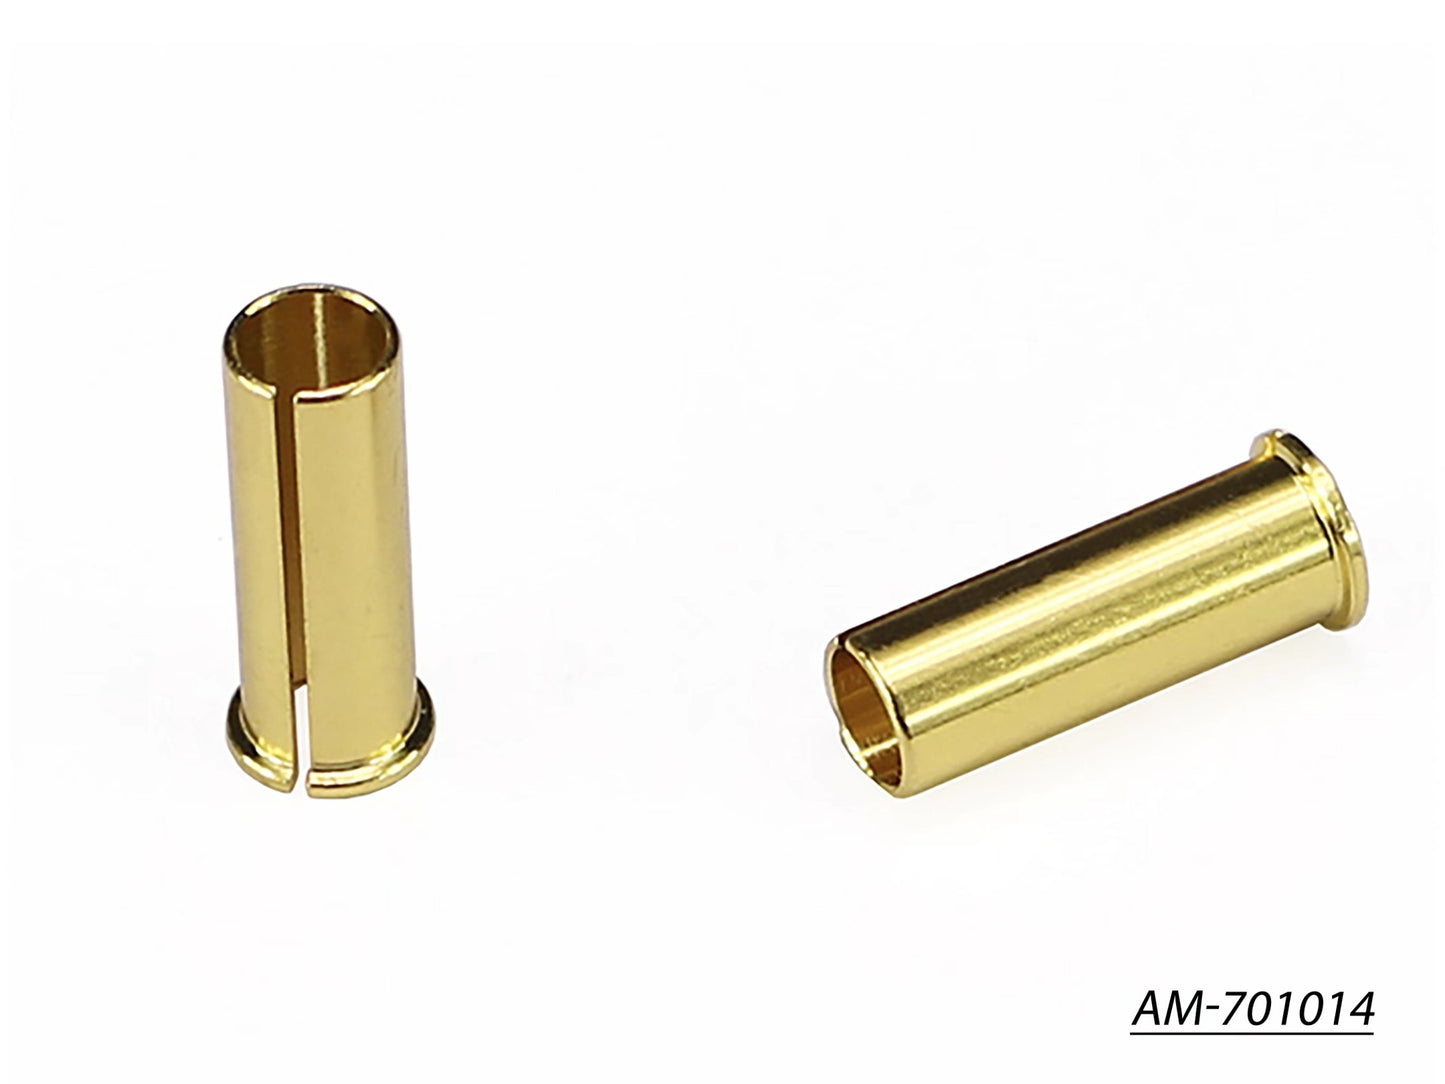 5 - 4mm Conversion Bullet Reducer 24K (2) (AM-701014)